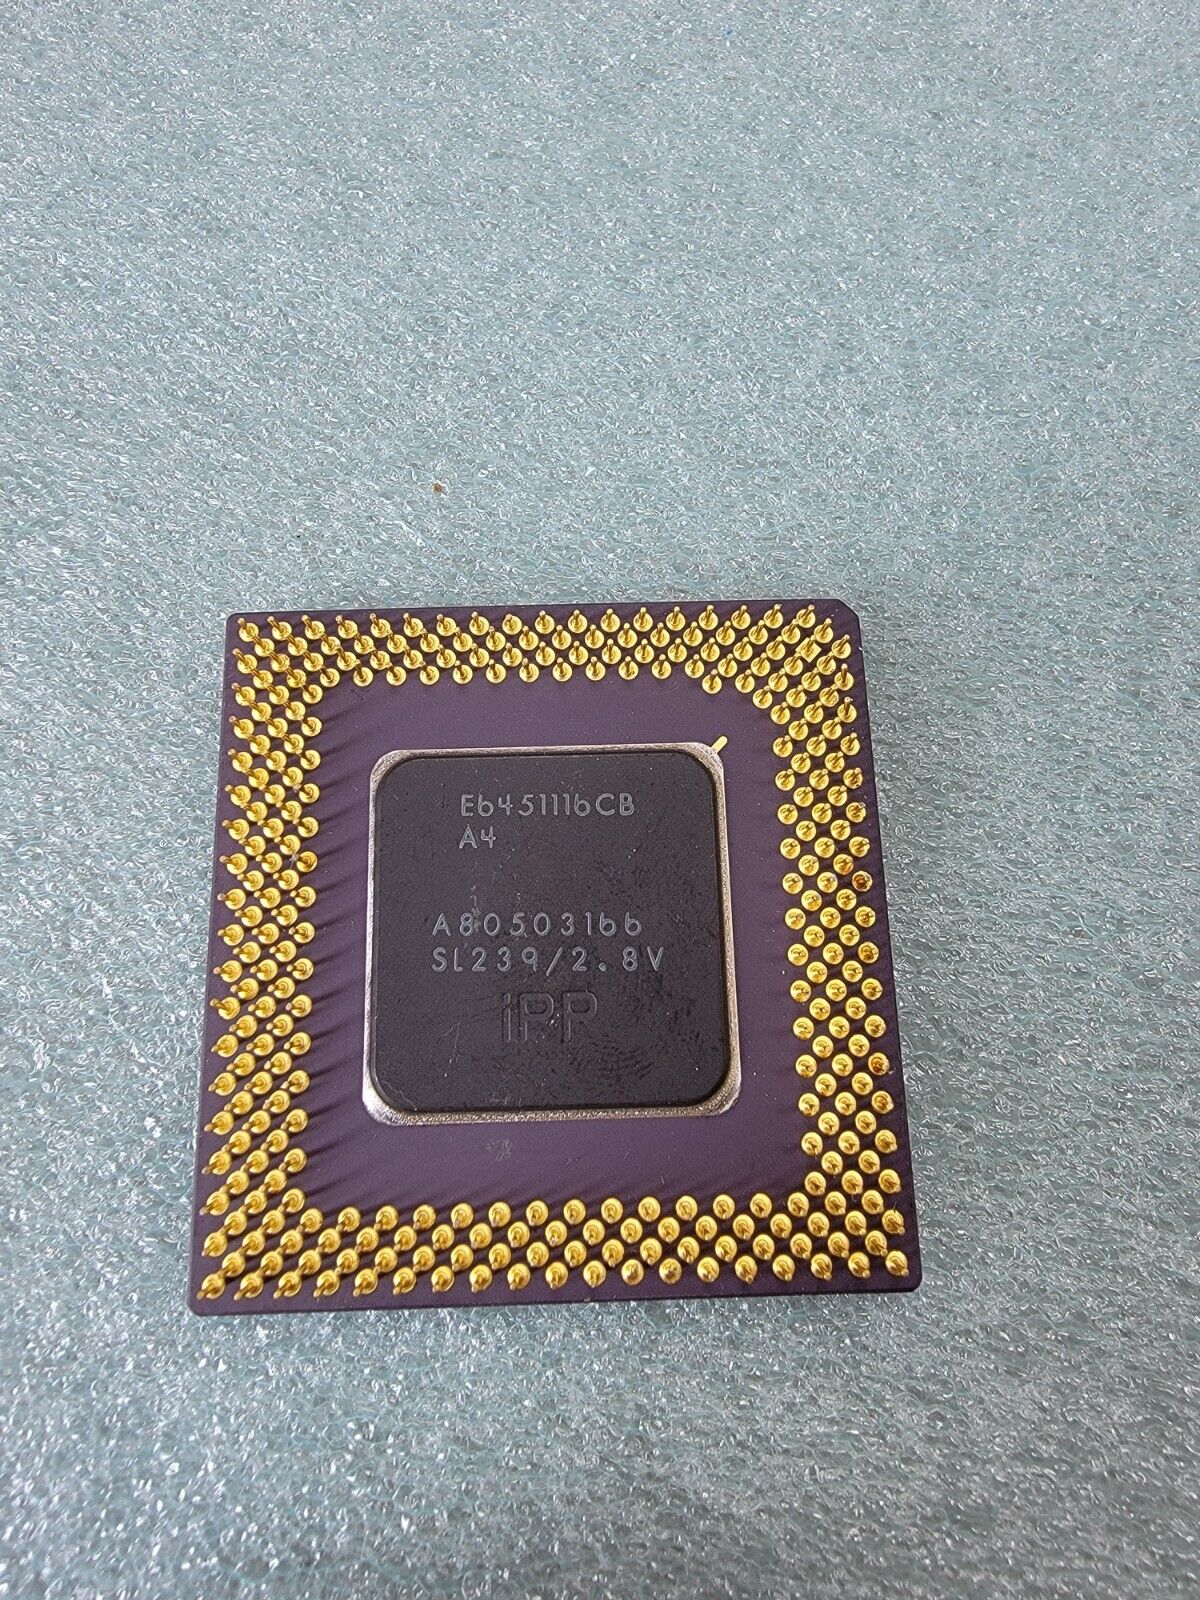 Intel Pentium MMX 166 MHz SL27K 166MHz 66M Socket 7 A80503166 ✅ Rare CPU Vintage